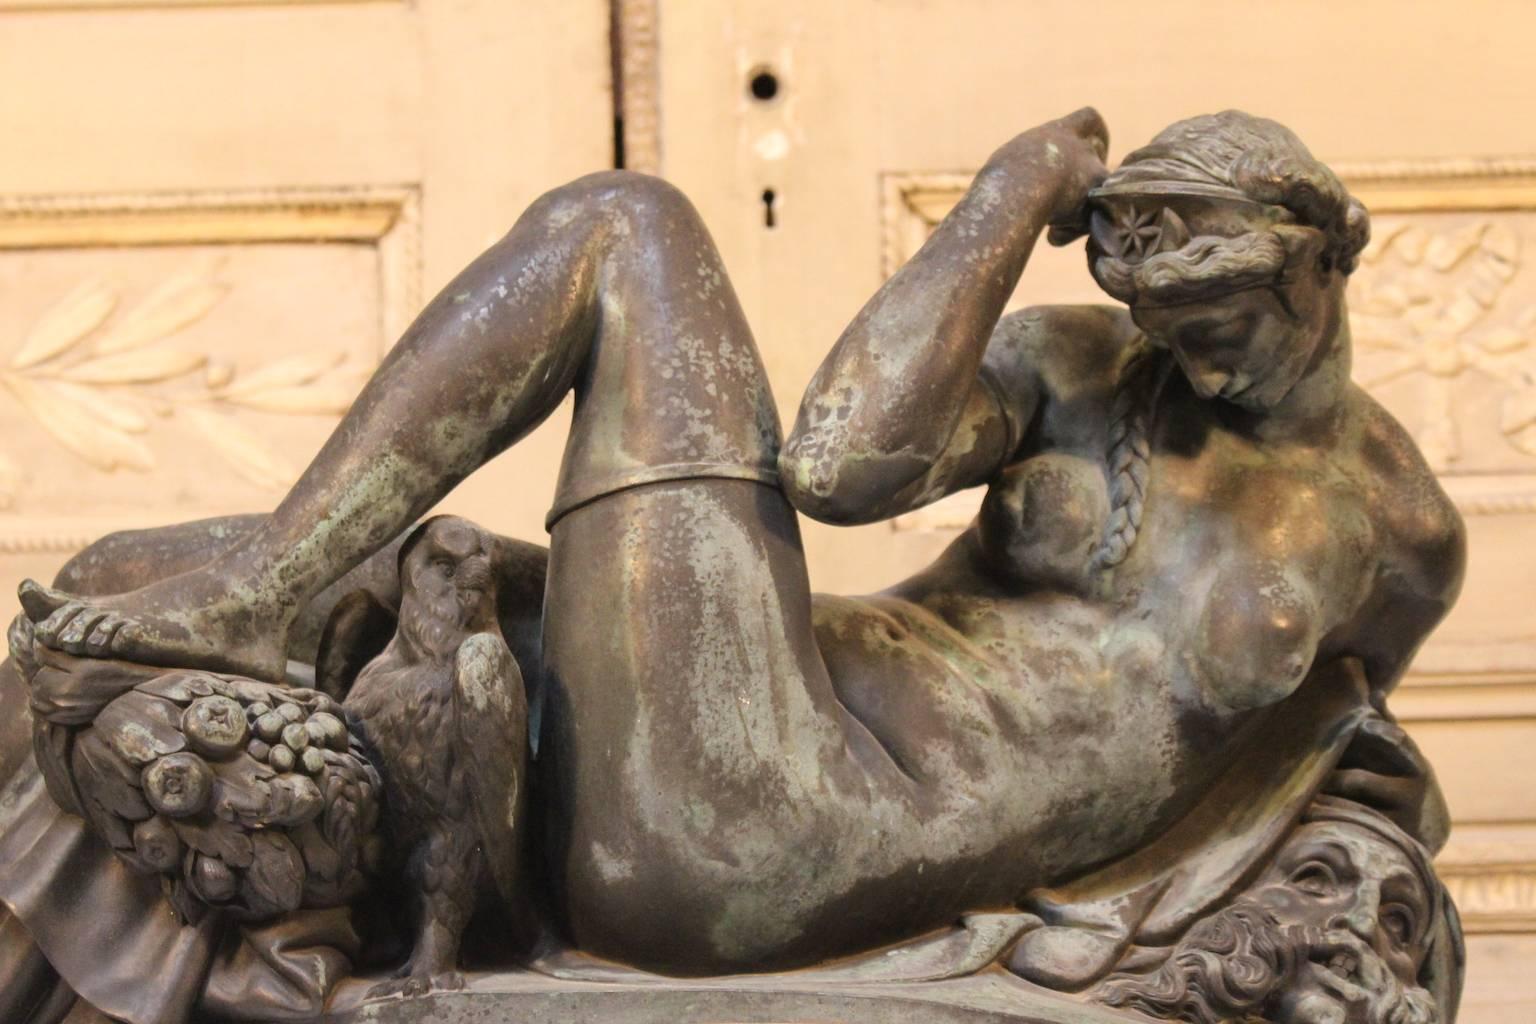 A large bronze sculpture depicting the Di Medici tomb figure, 